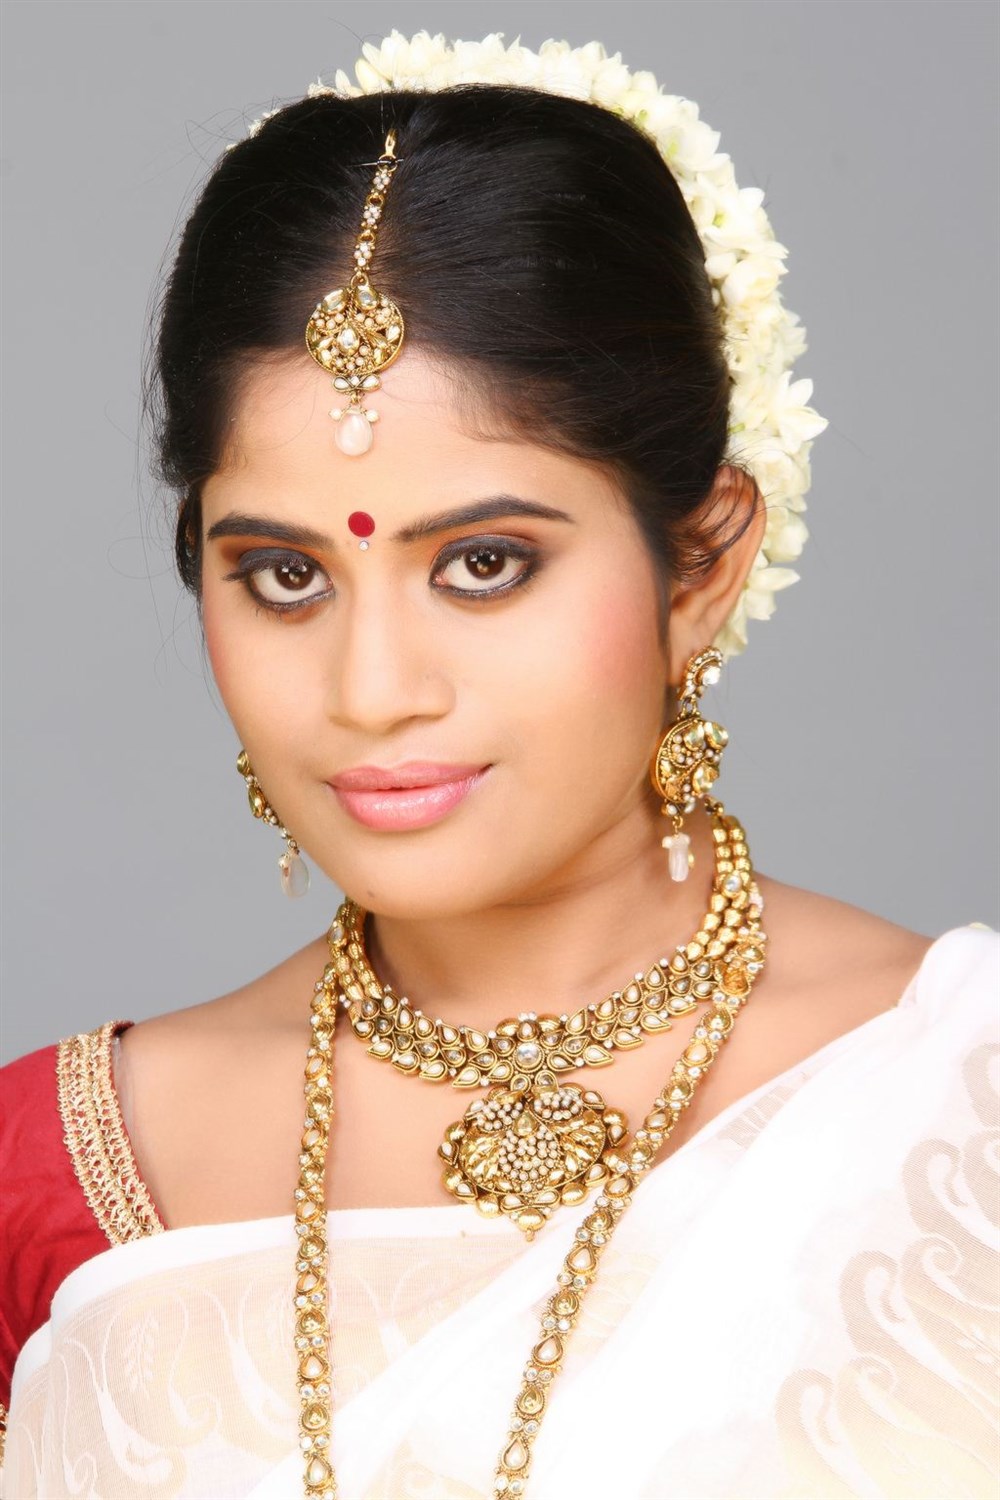 Tamil Actress Rithika Photoshoot Stills | New Movie Posters